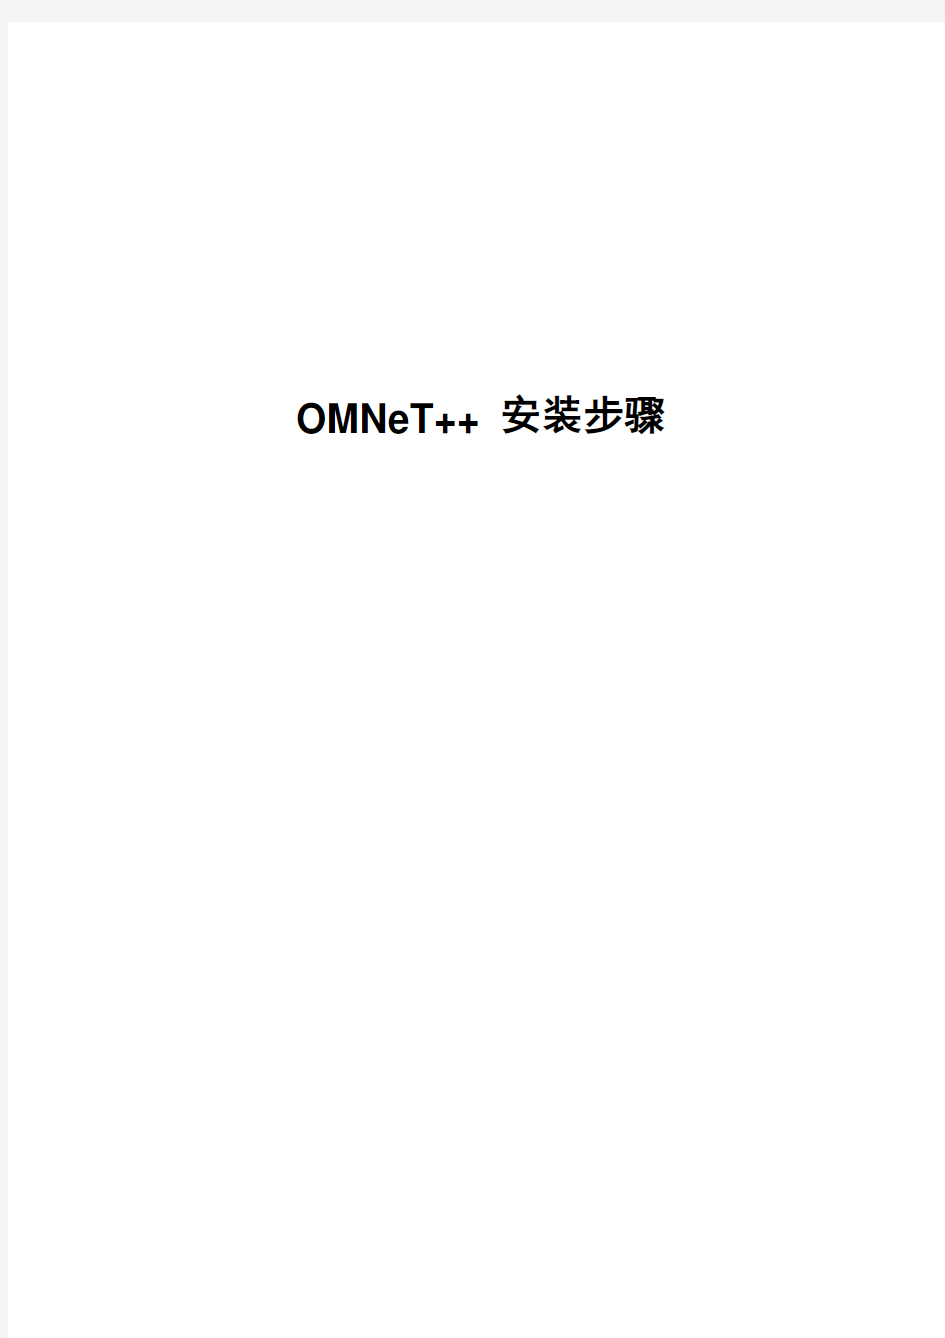 Omnet+++在VC+6[1].0+的安装步骤